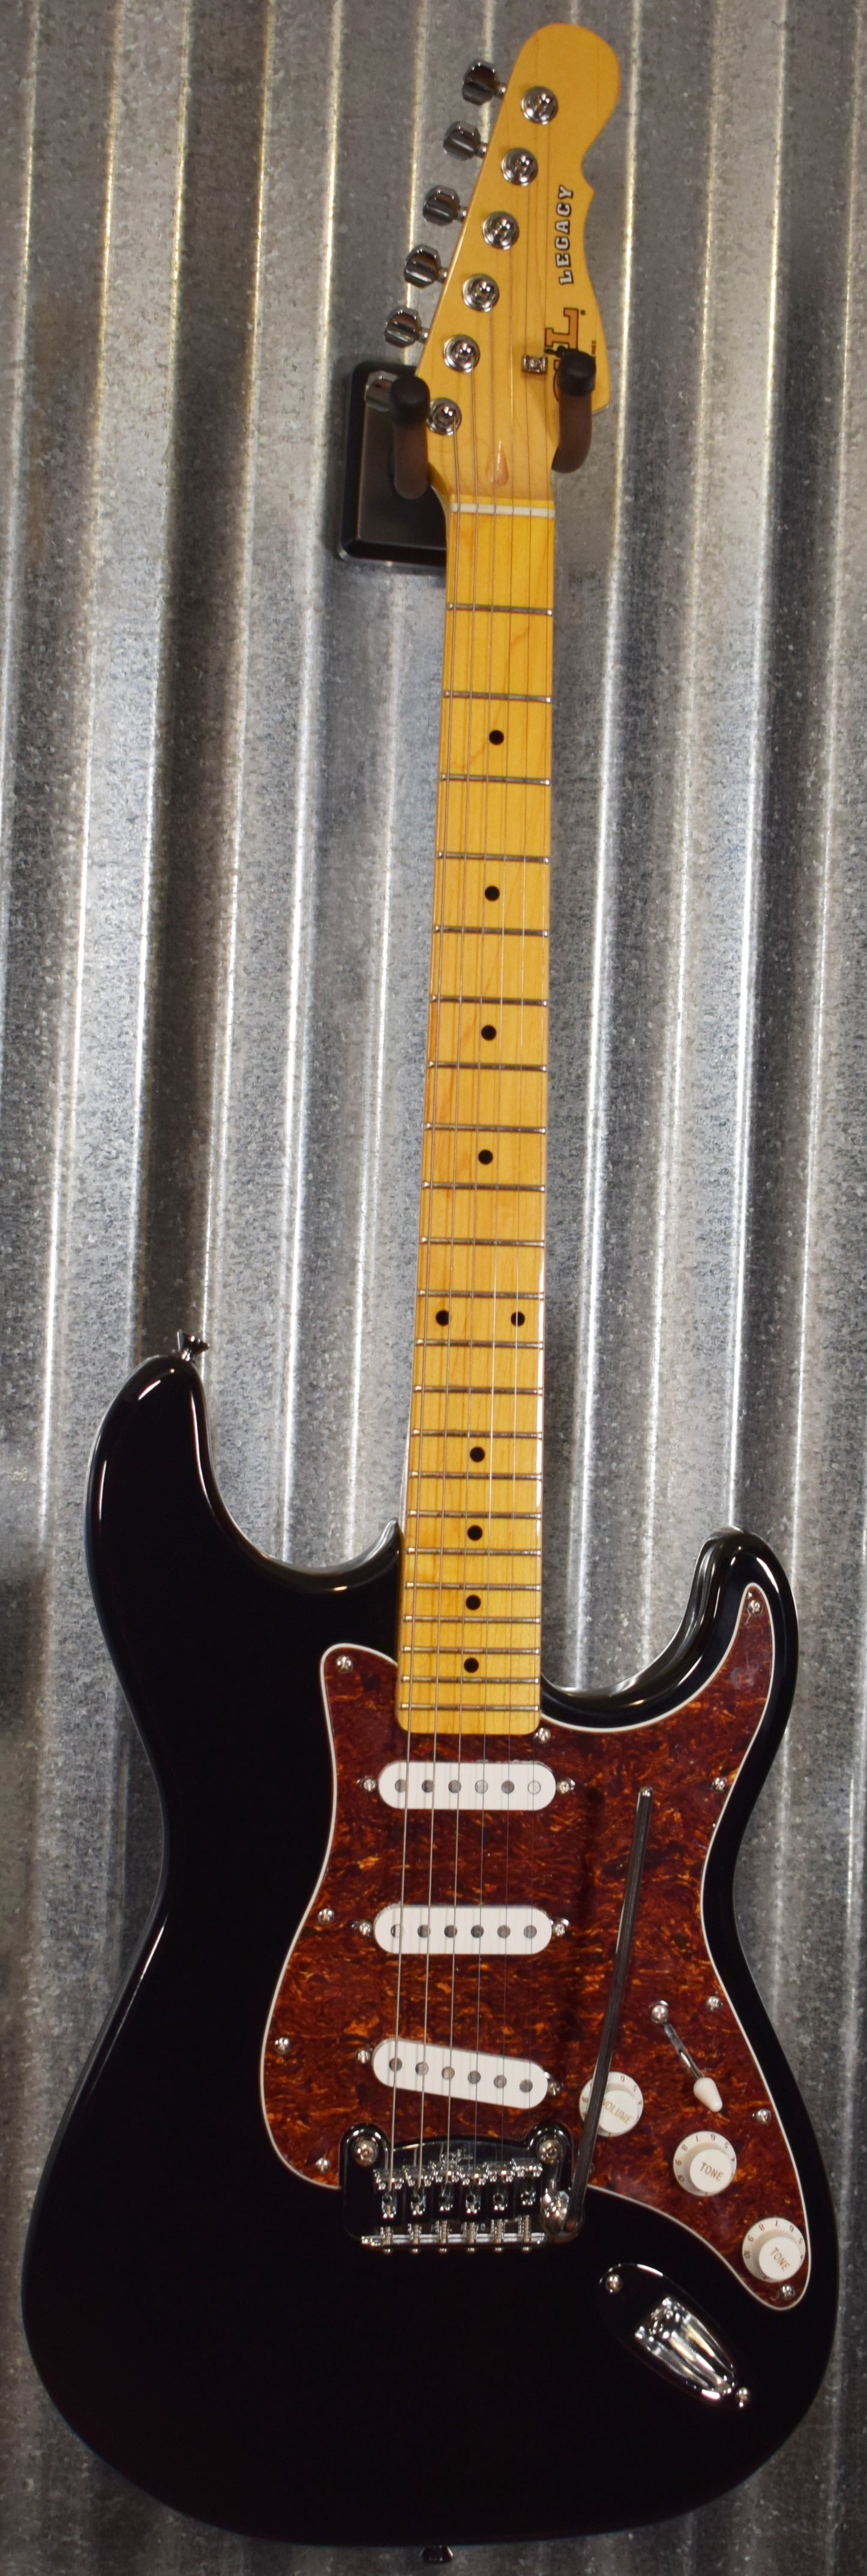 G&L Tribute Legacy Black Guitar #3940 Used